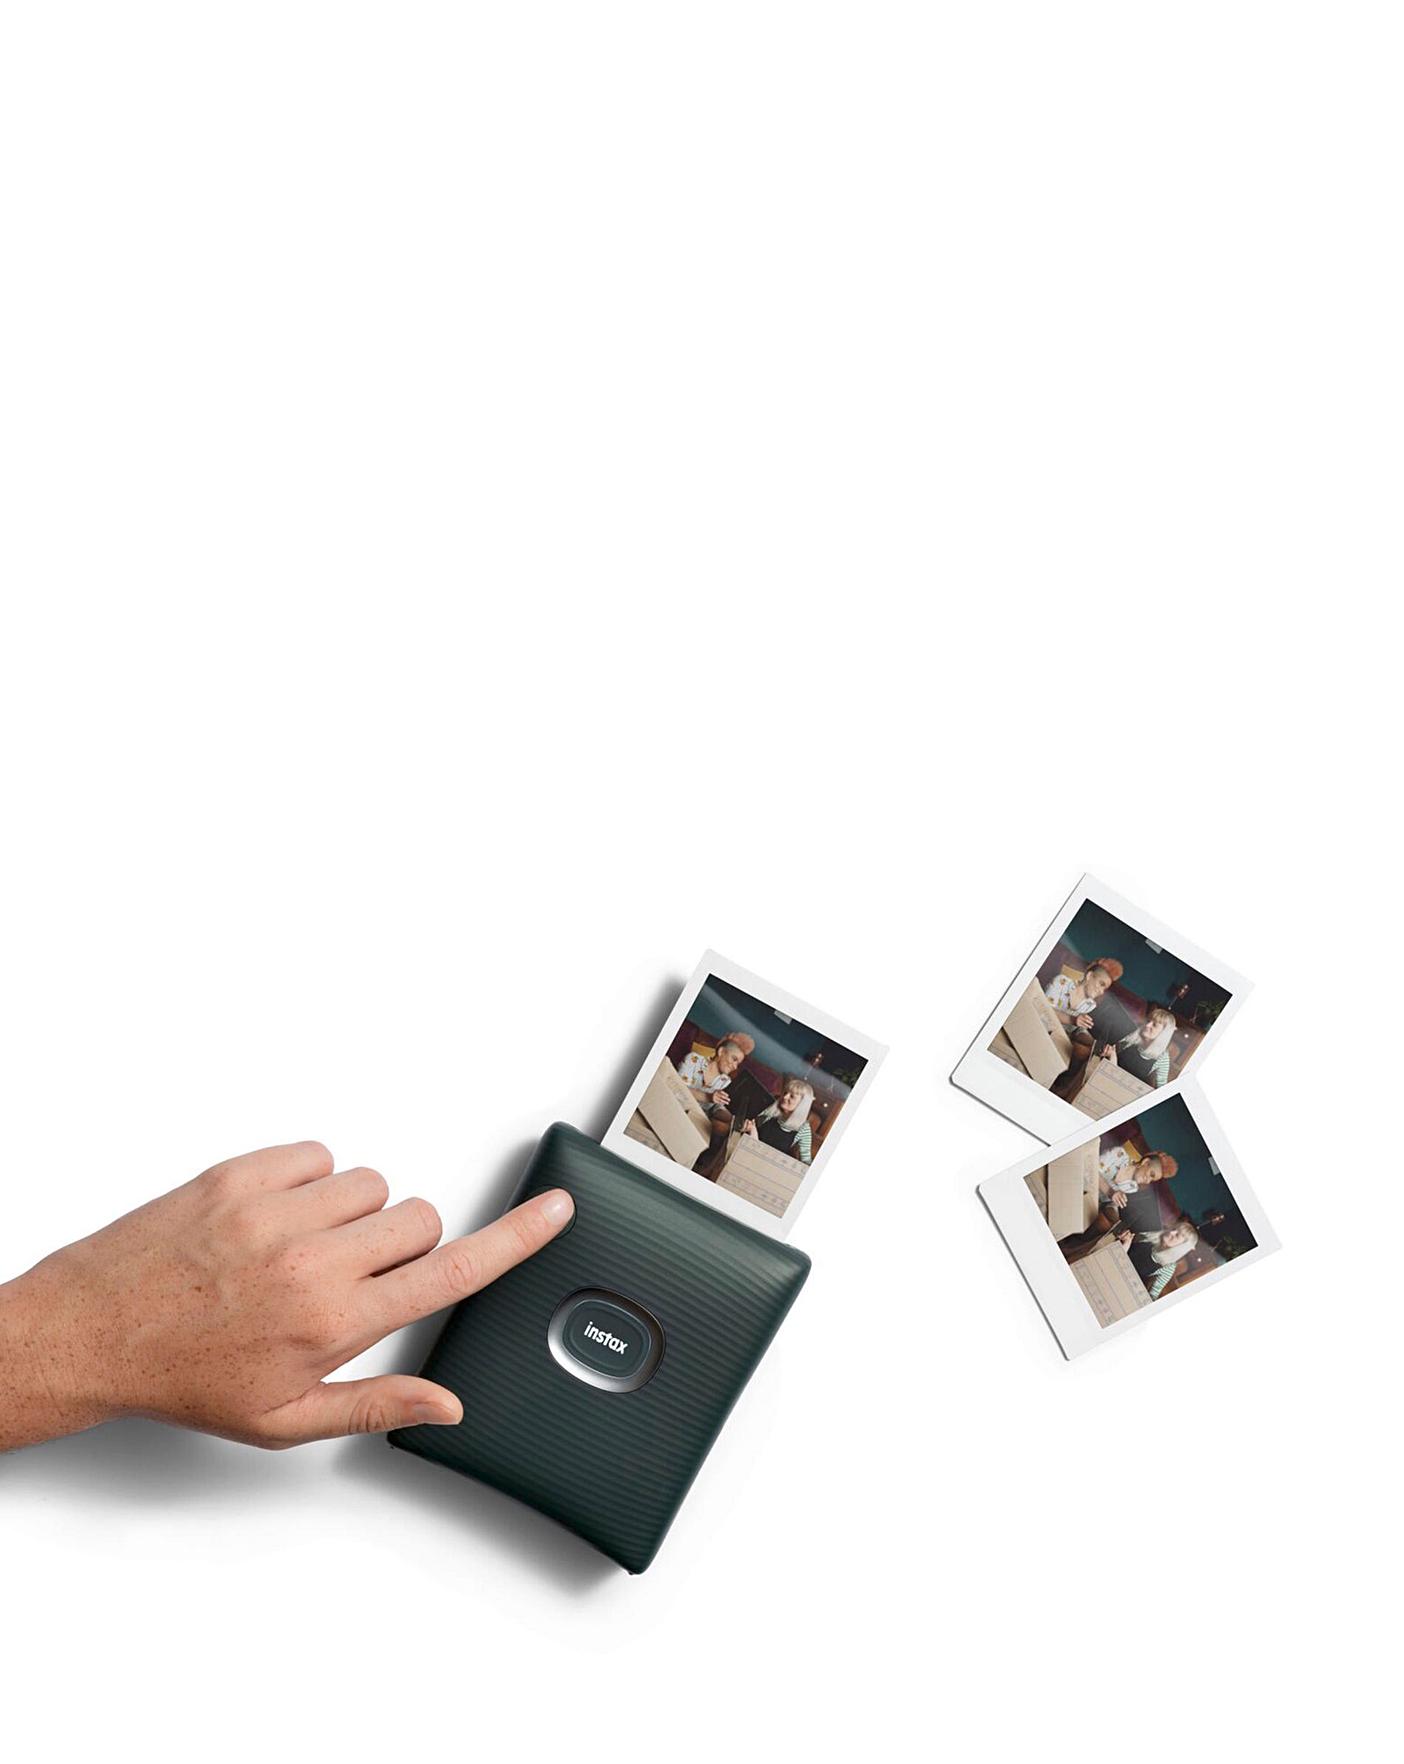 Fujifilm Instax Square Link Wireless Smartphone Photo Printer(20 Shots) -  Green